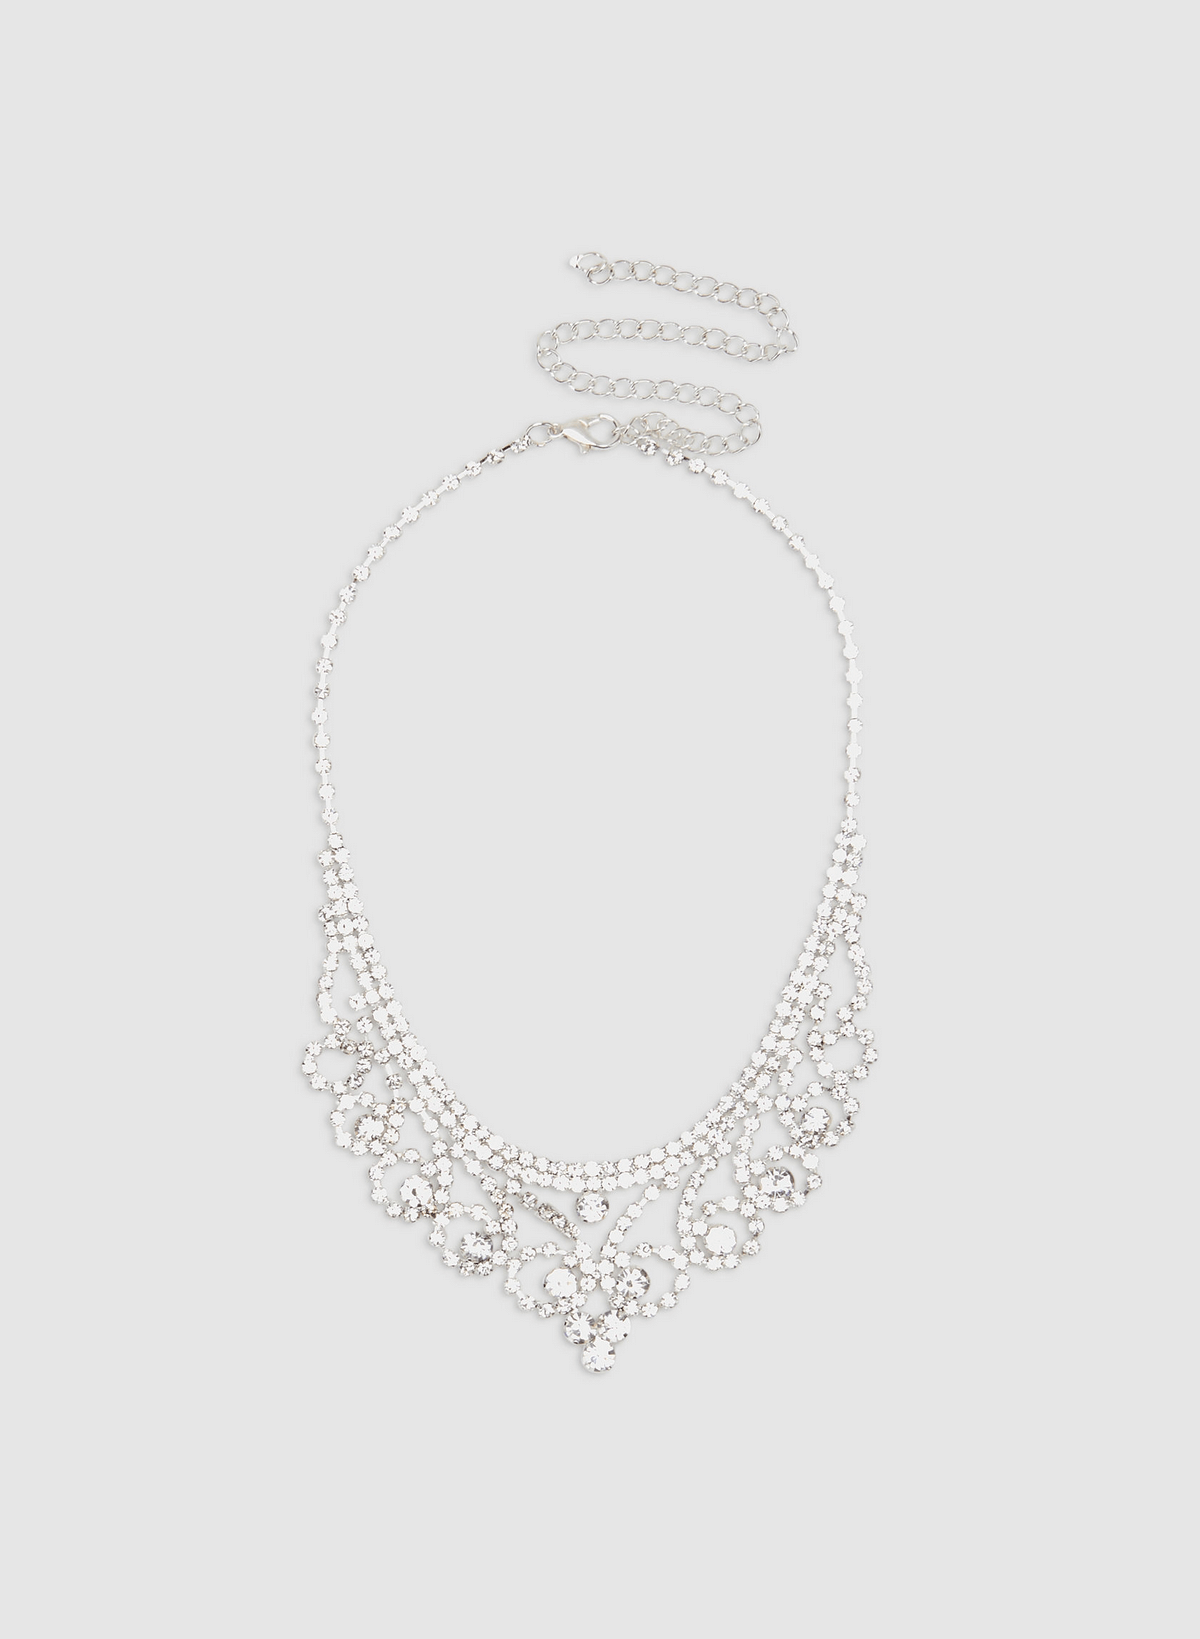 Accessories - Crystal Bib Necklace - Laura